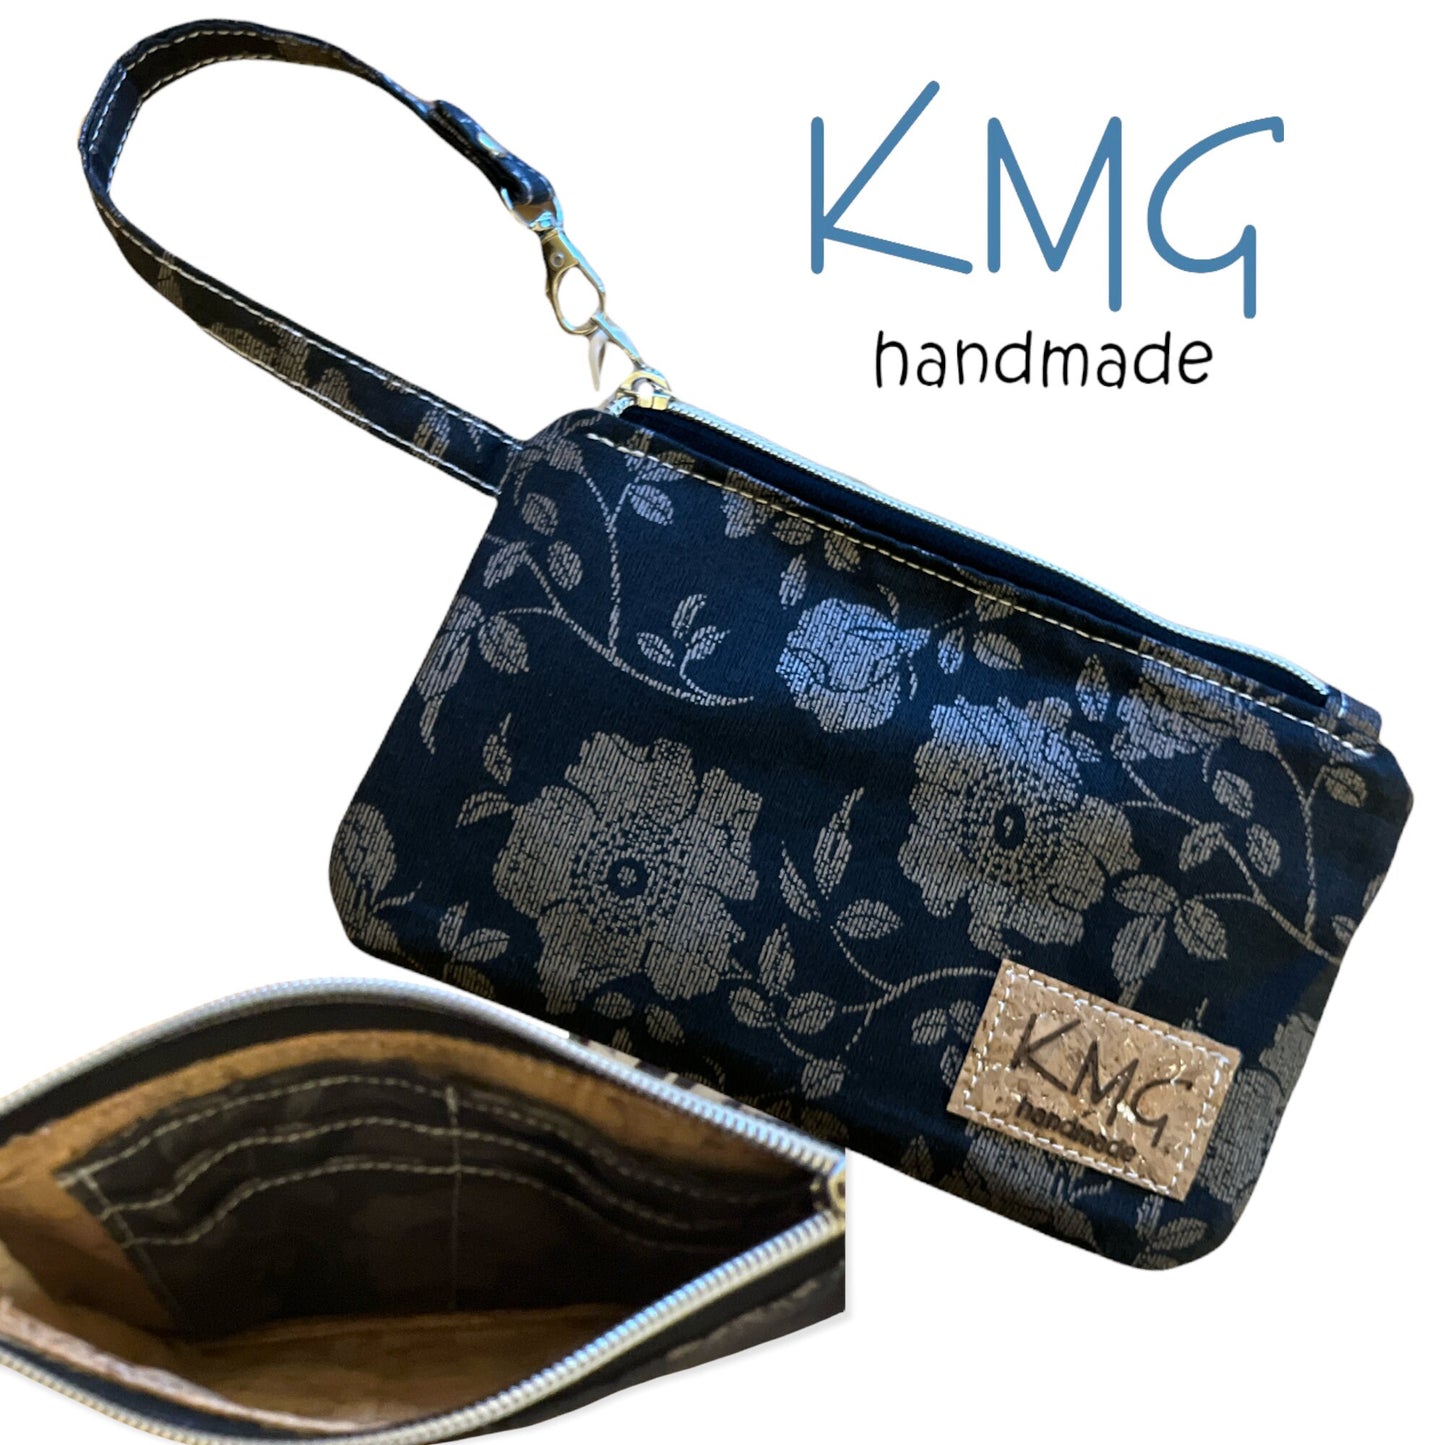 KMGhandmade Original Clip & Zip Wristlets - Group C